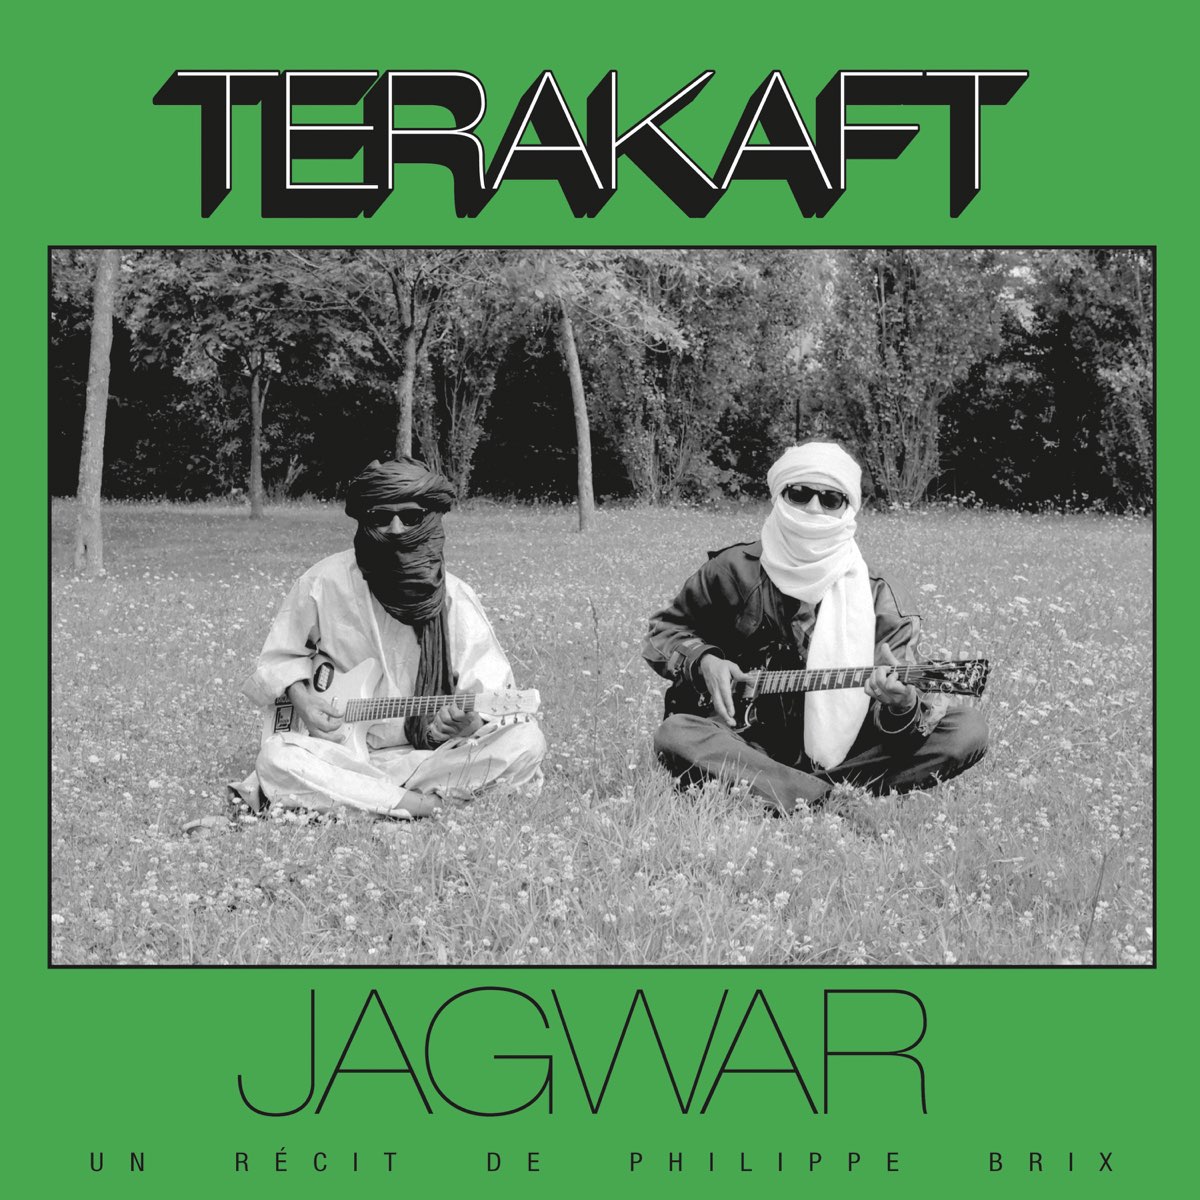 Terakaft. Terakaft Amazzagh. Terakaft Википедия. Картинка песни Jagwar. Jagwar twin песня bad feeling на русском